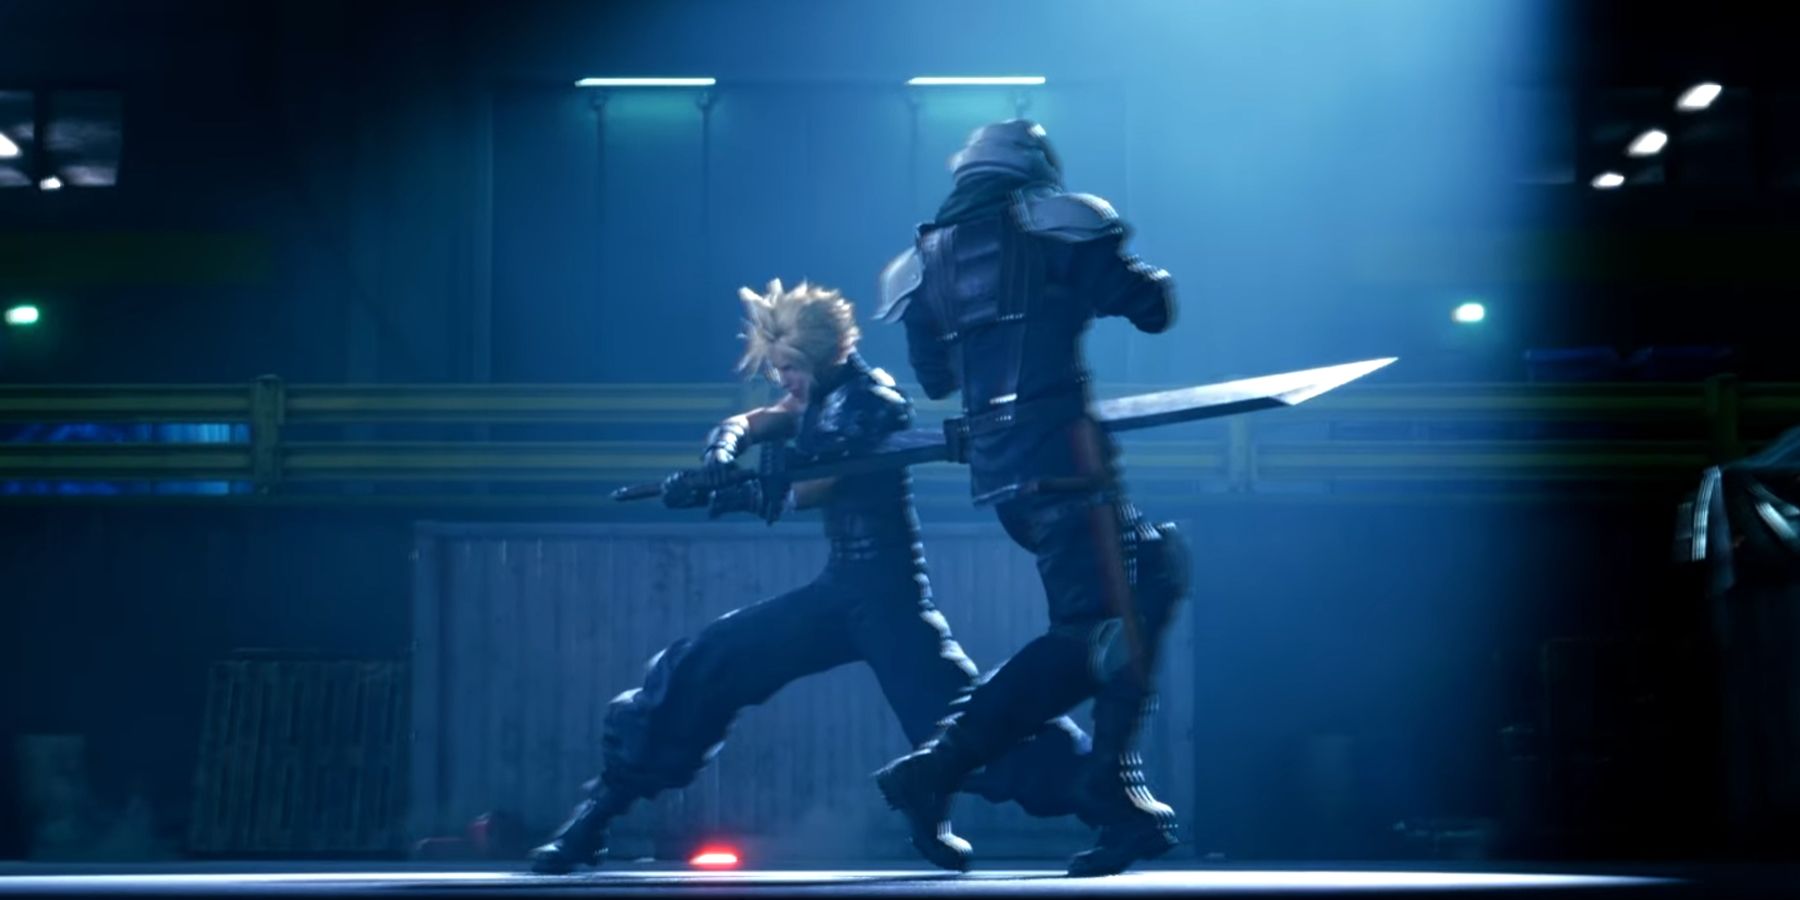 Cloud slicing Shinra soldier Final Fantasy 7 remake